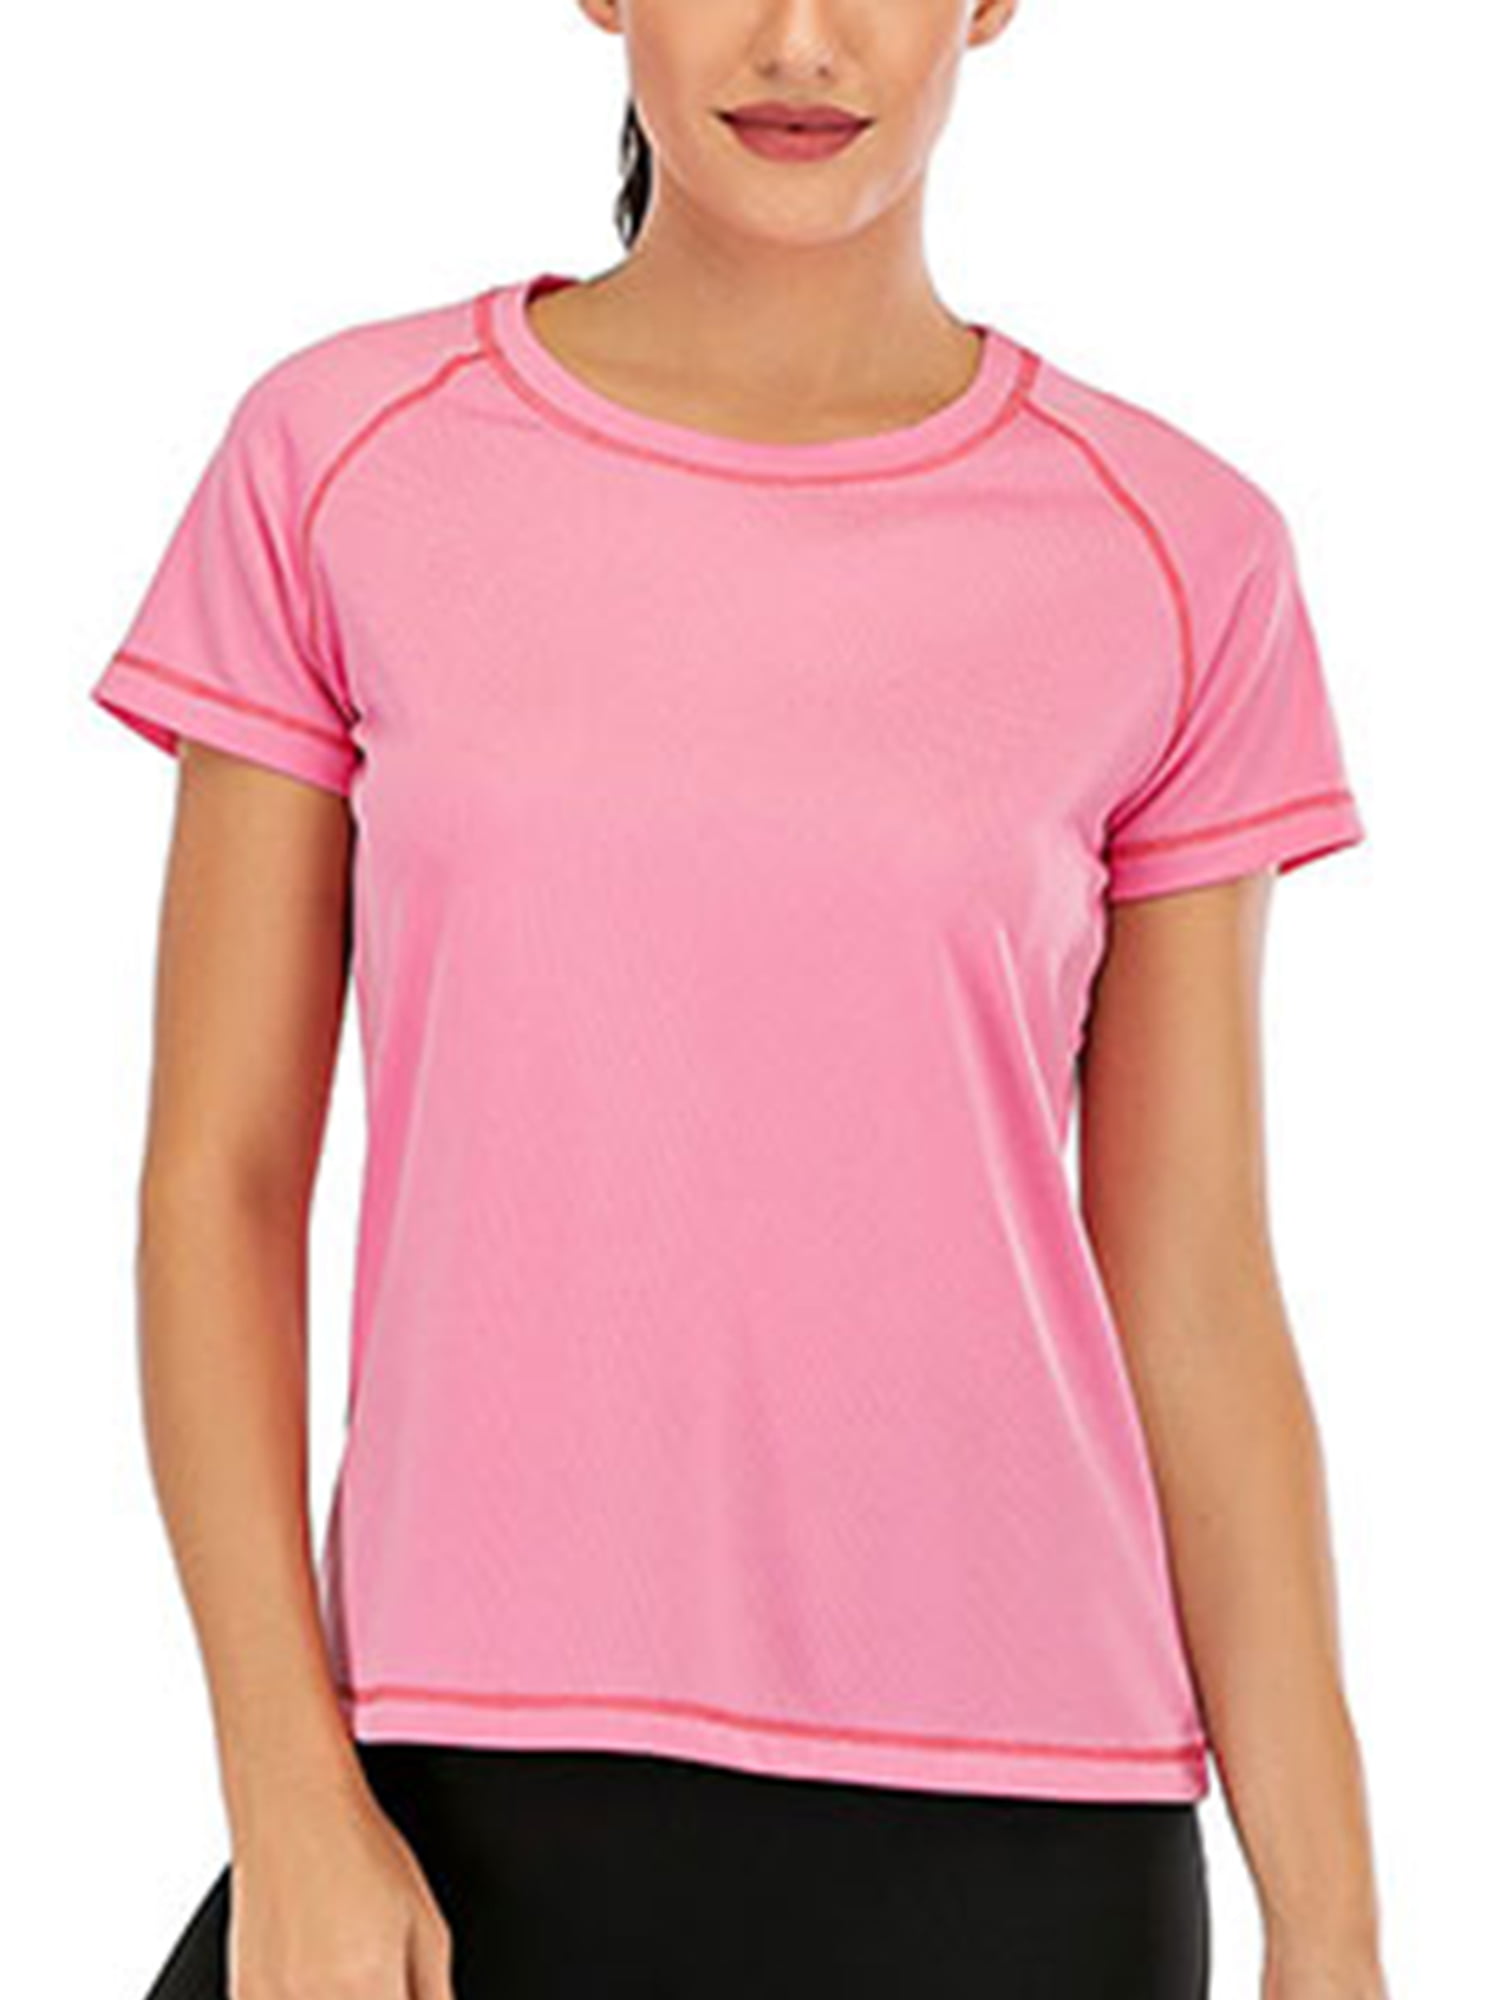 Loovoo Women Crewneck Short Sleeve Sports Running T-Shirts 2 Pack Workout Shirts Tee Top